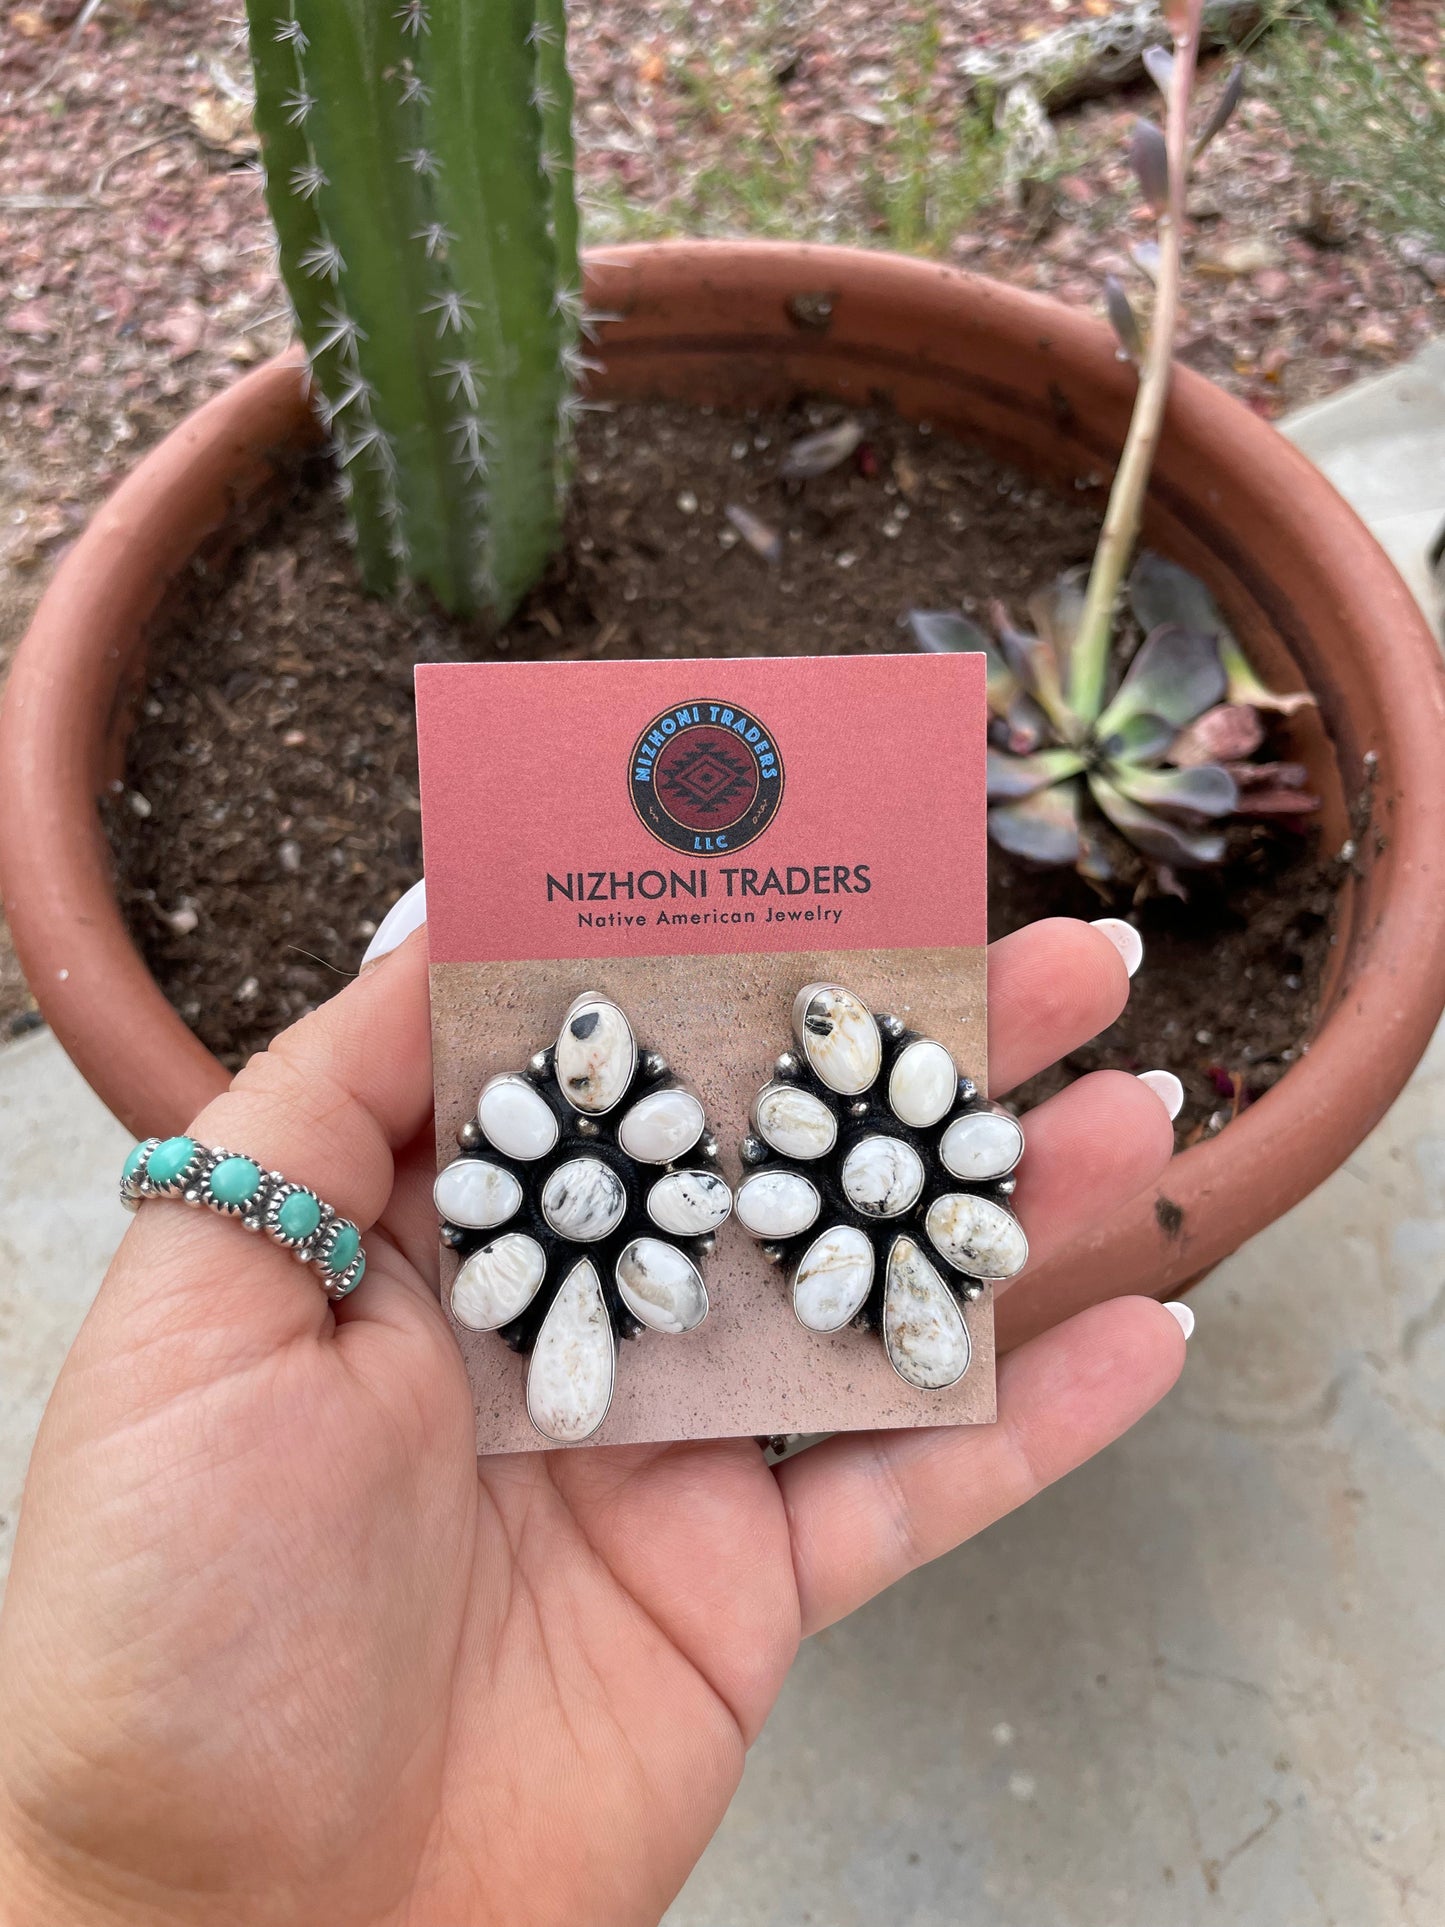 Navajo White Buffalo Cluster Earrings By Sheila Becenti